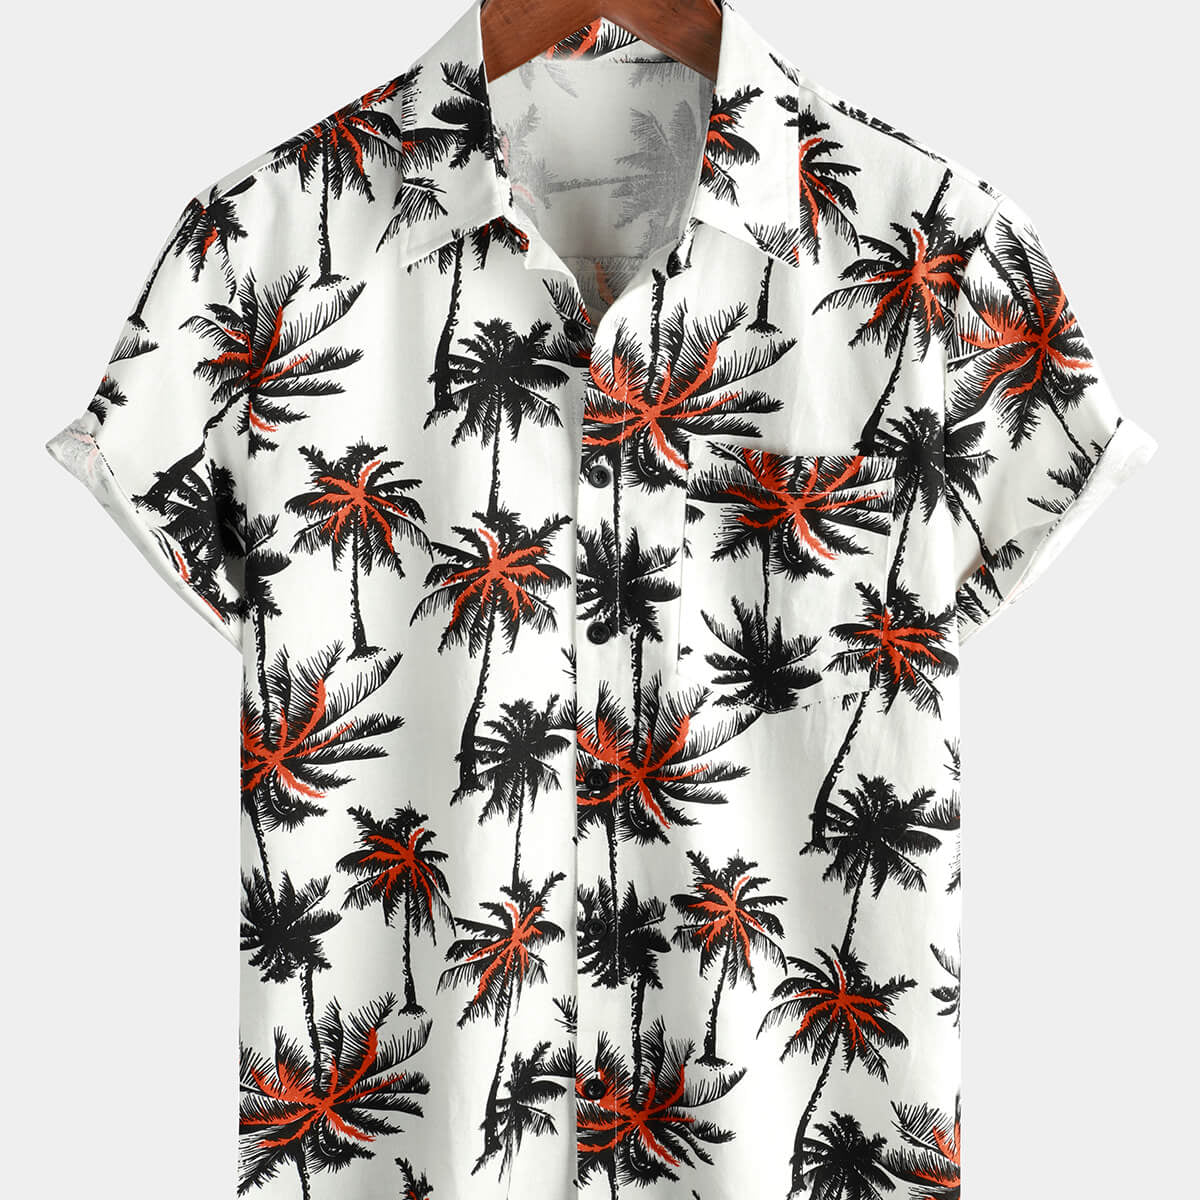 Men's Tropical Coconut Print Cotton Linen Button Up Short Sleeve Shirt